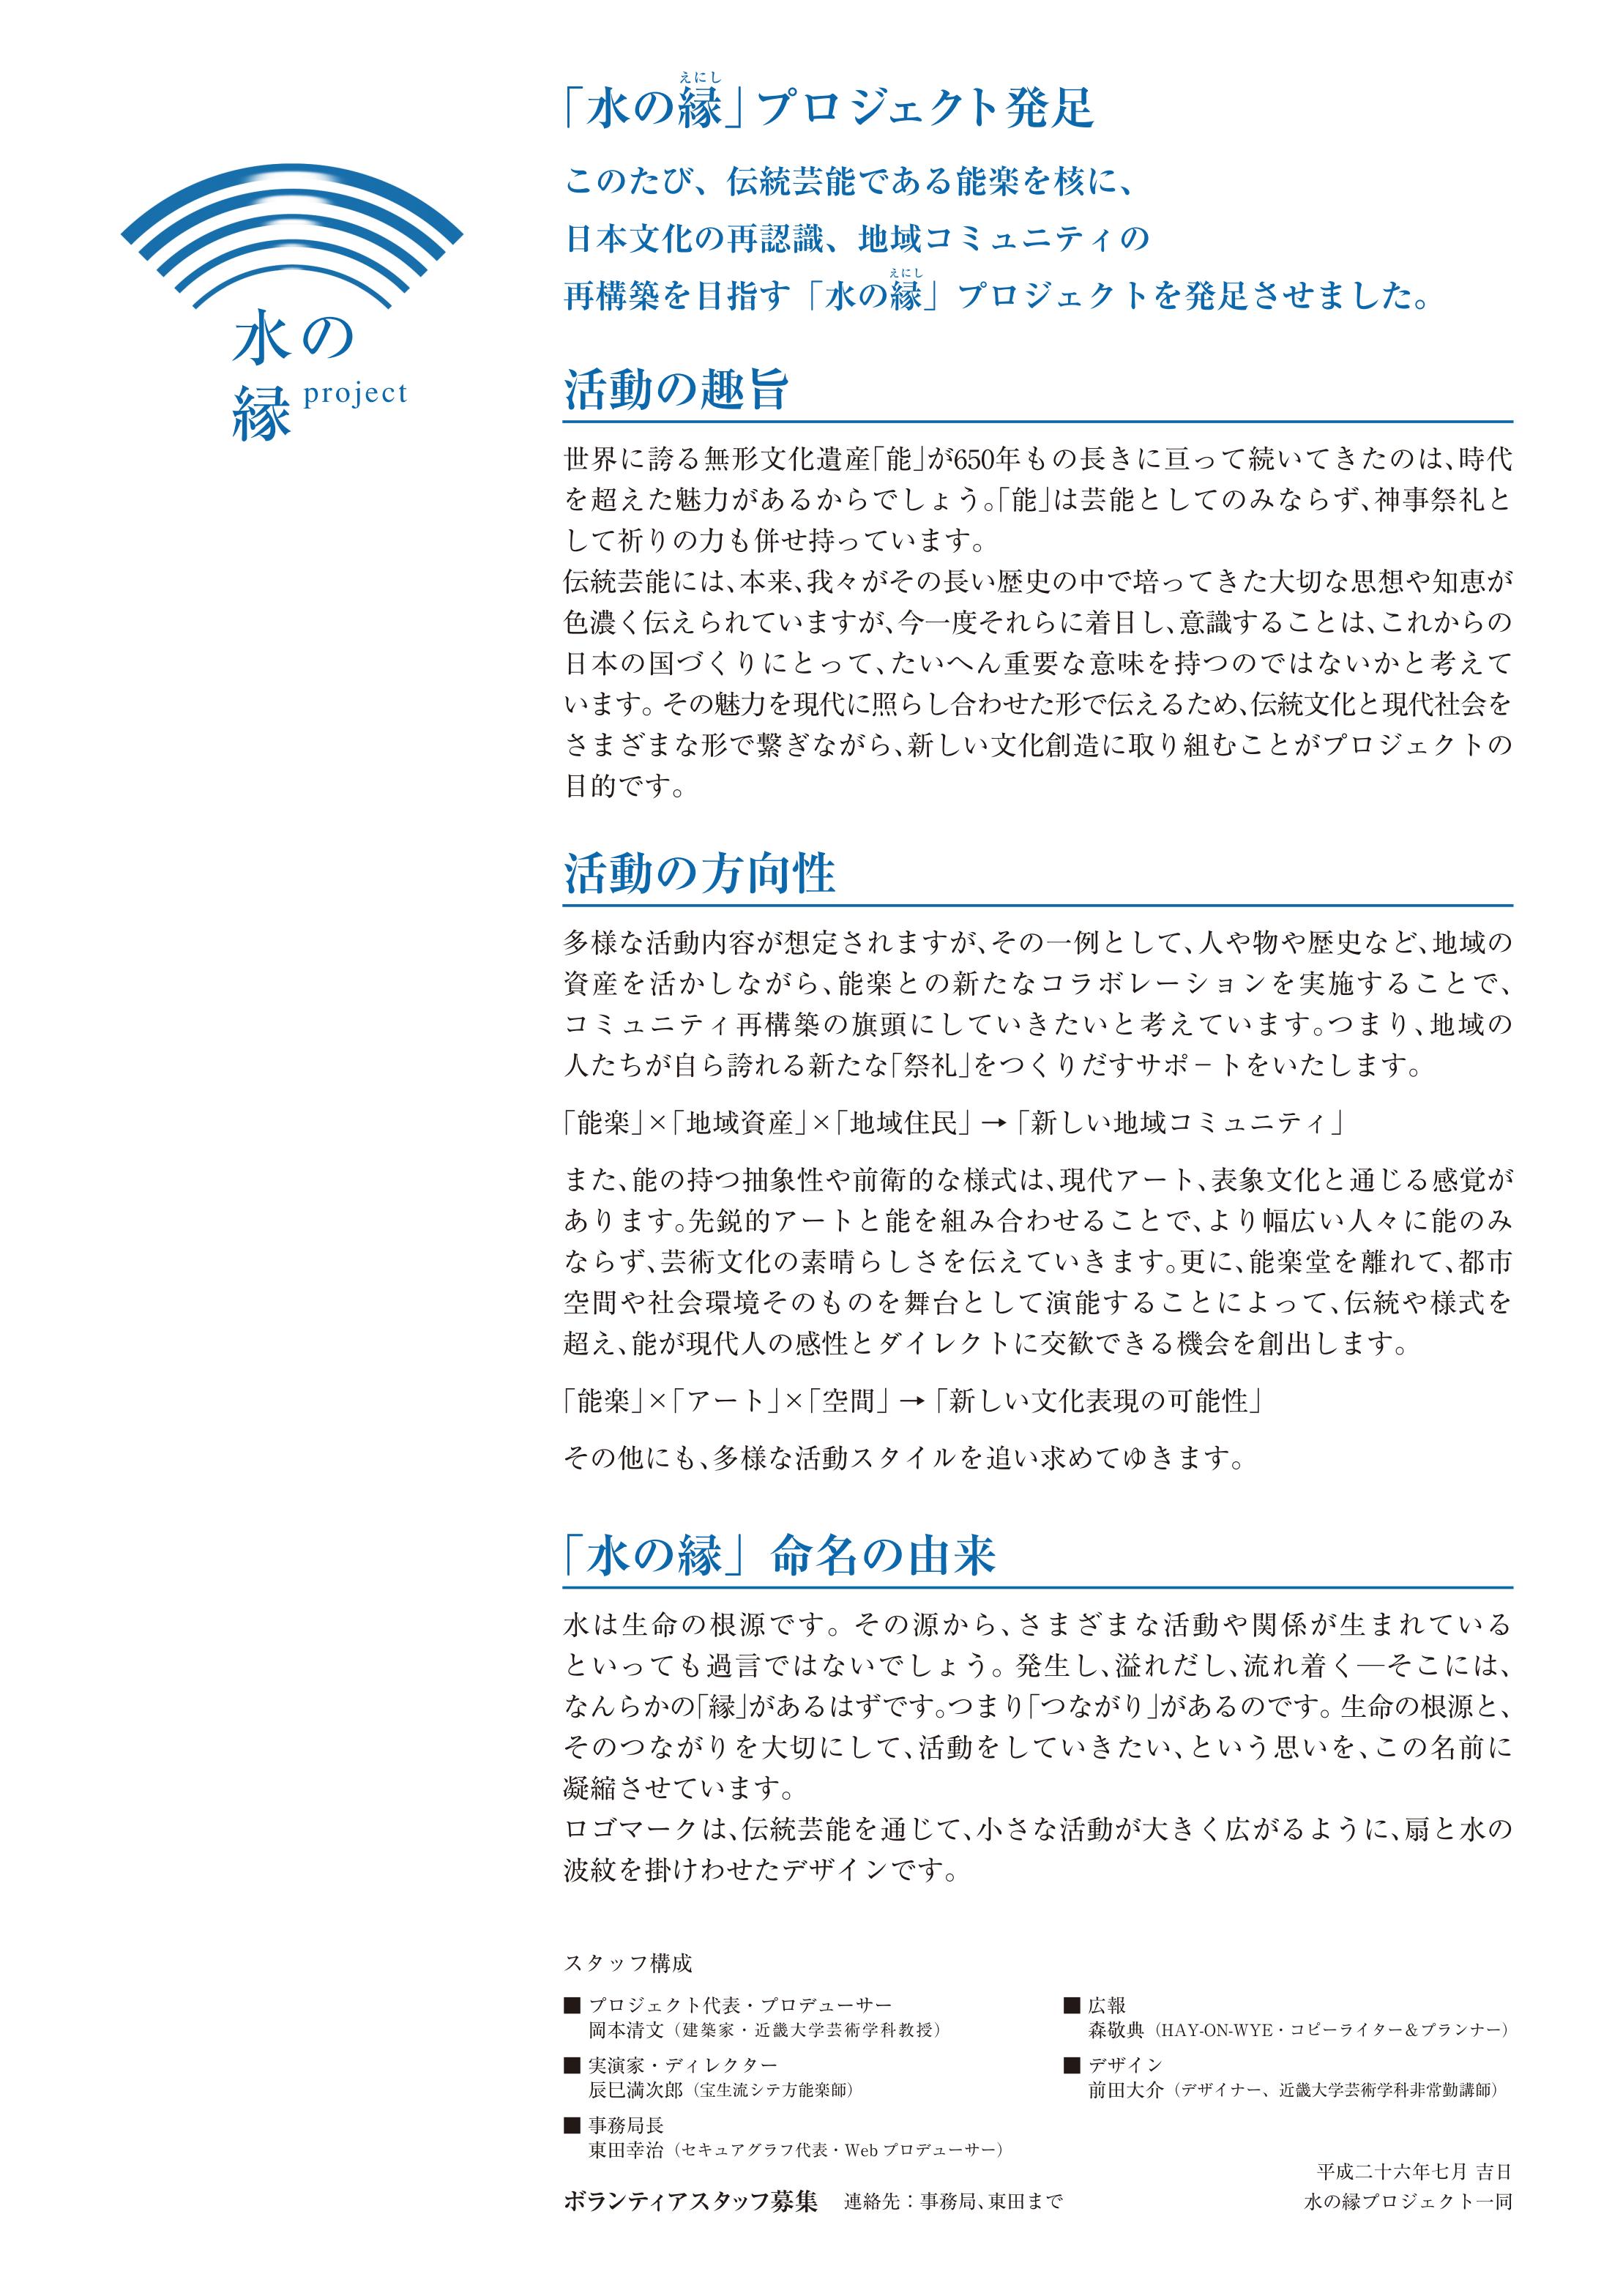 http://manjiro-nohgaku.com/blog/mizuno_enishi_policy_01.jpg